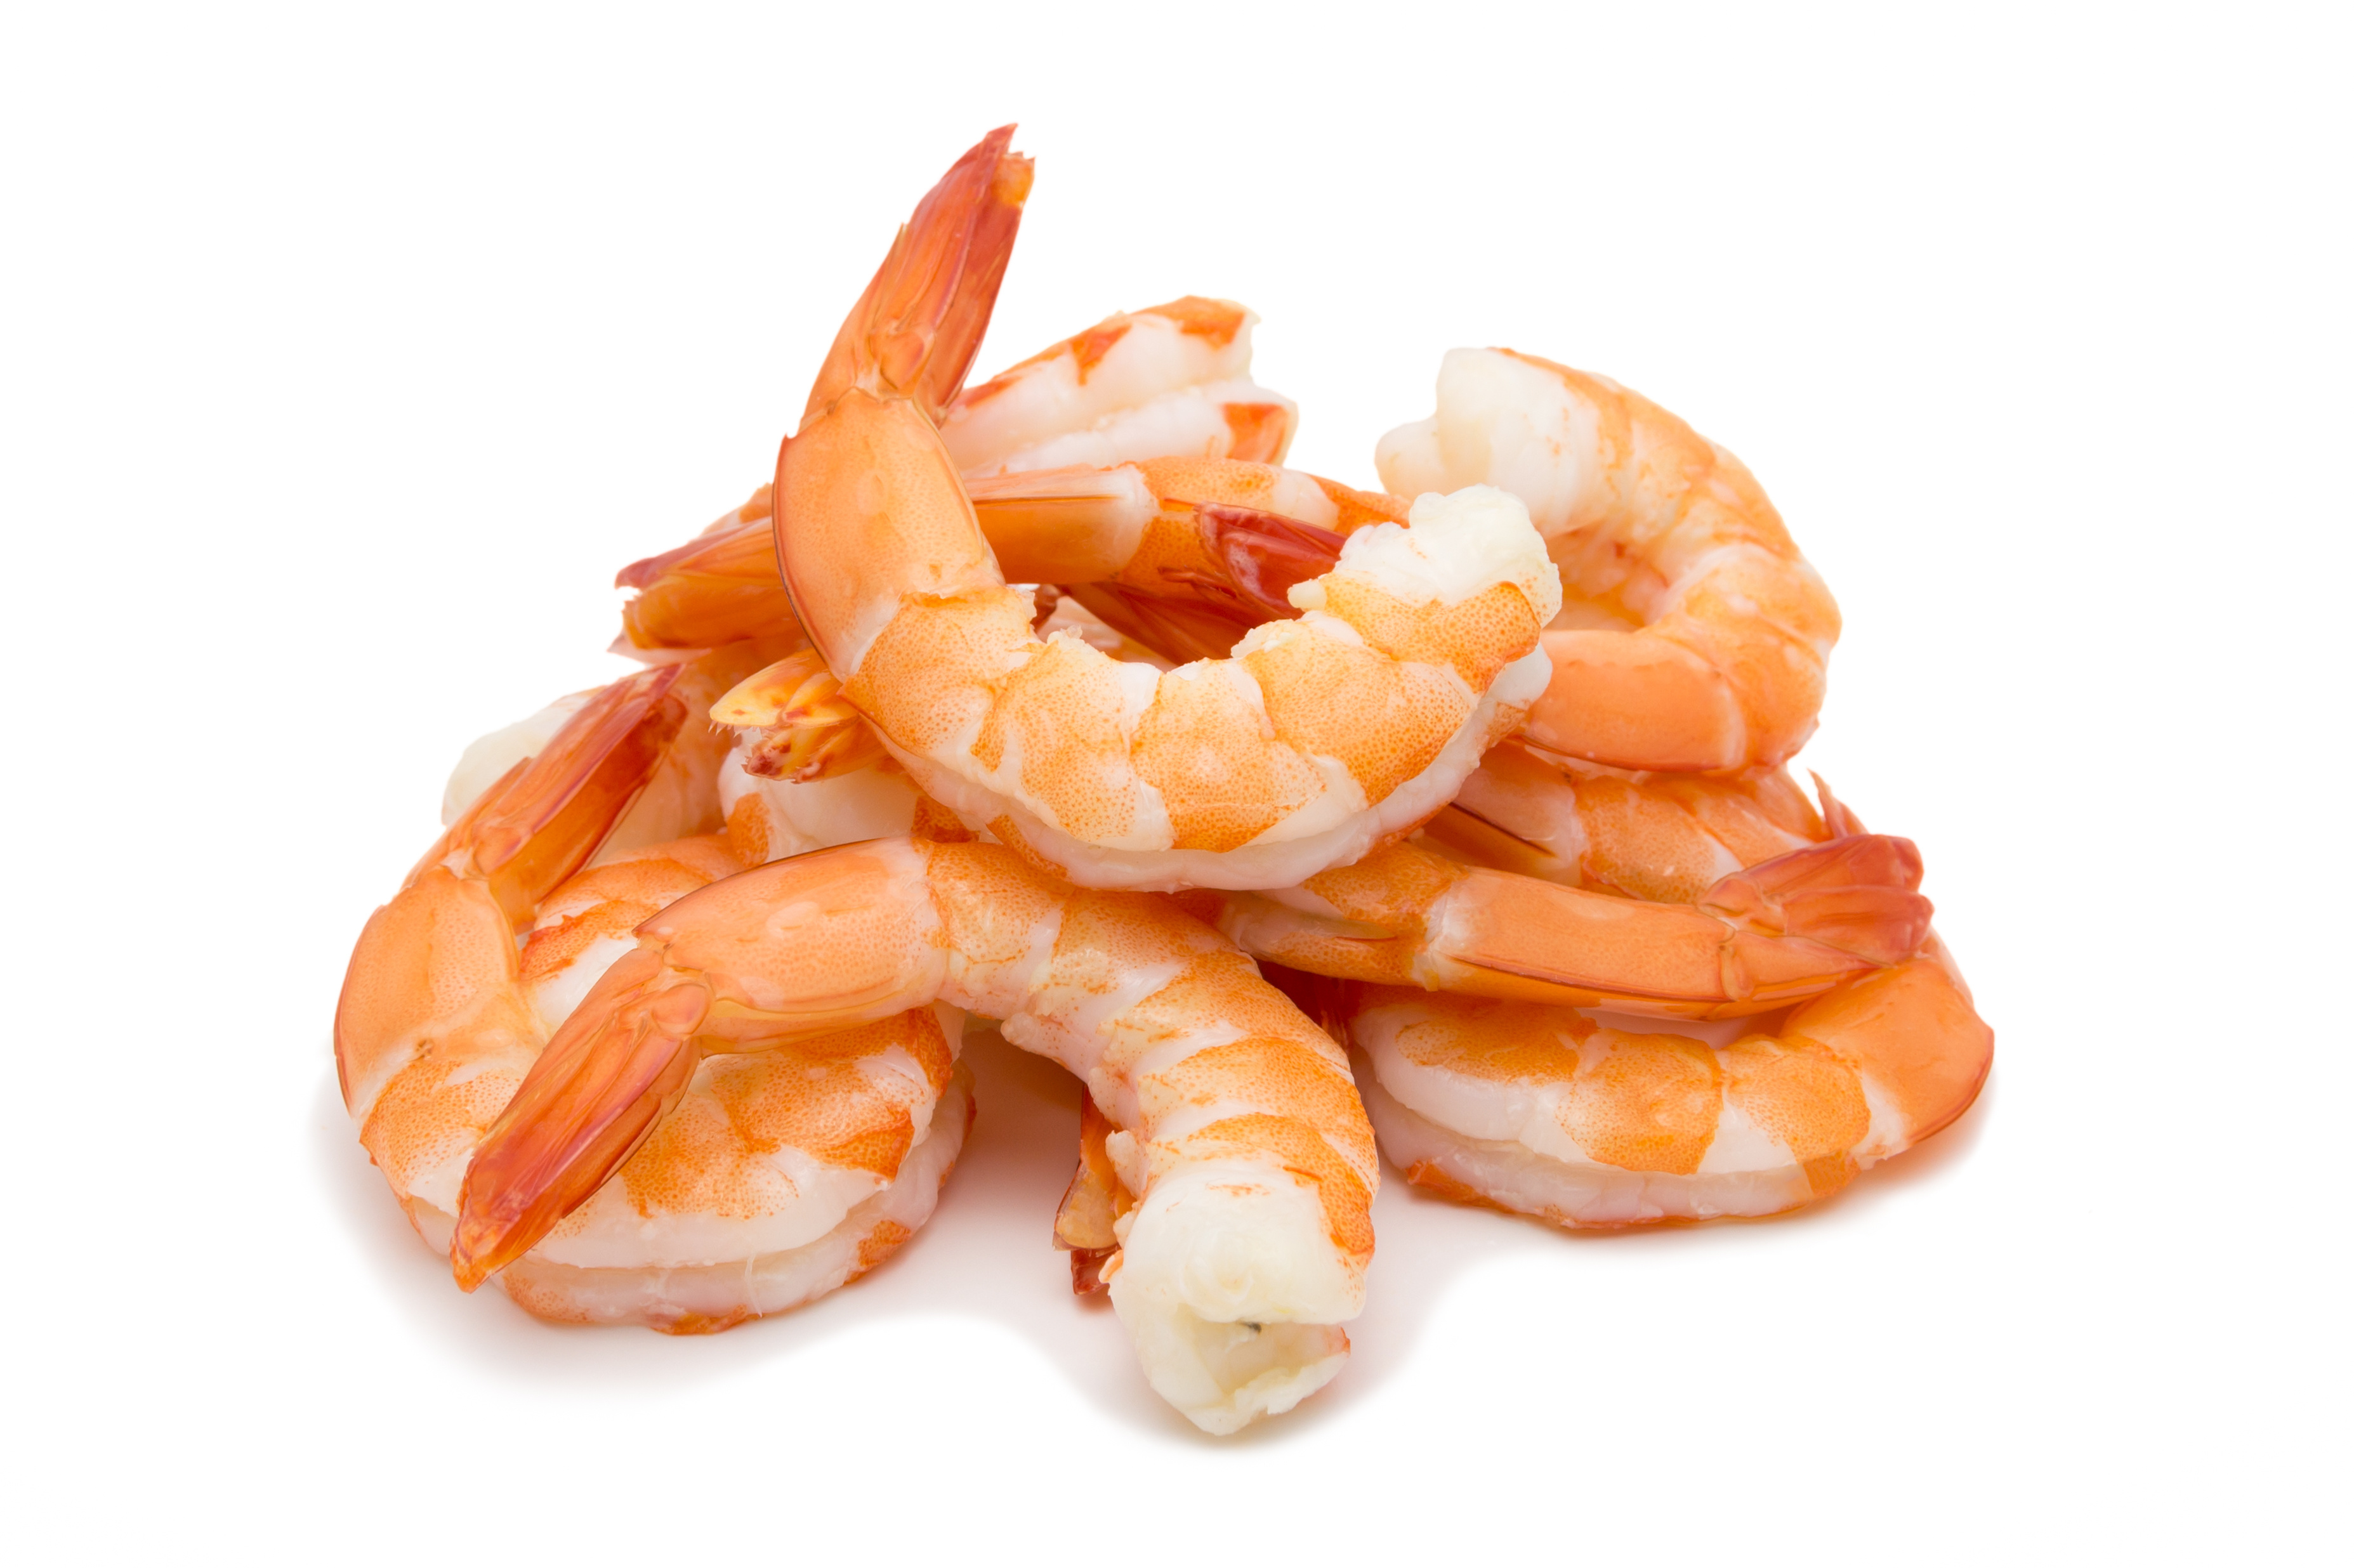 Cookied shrimps